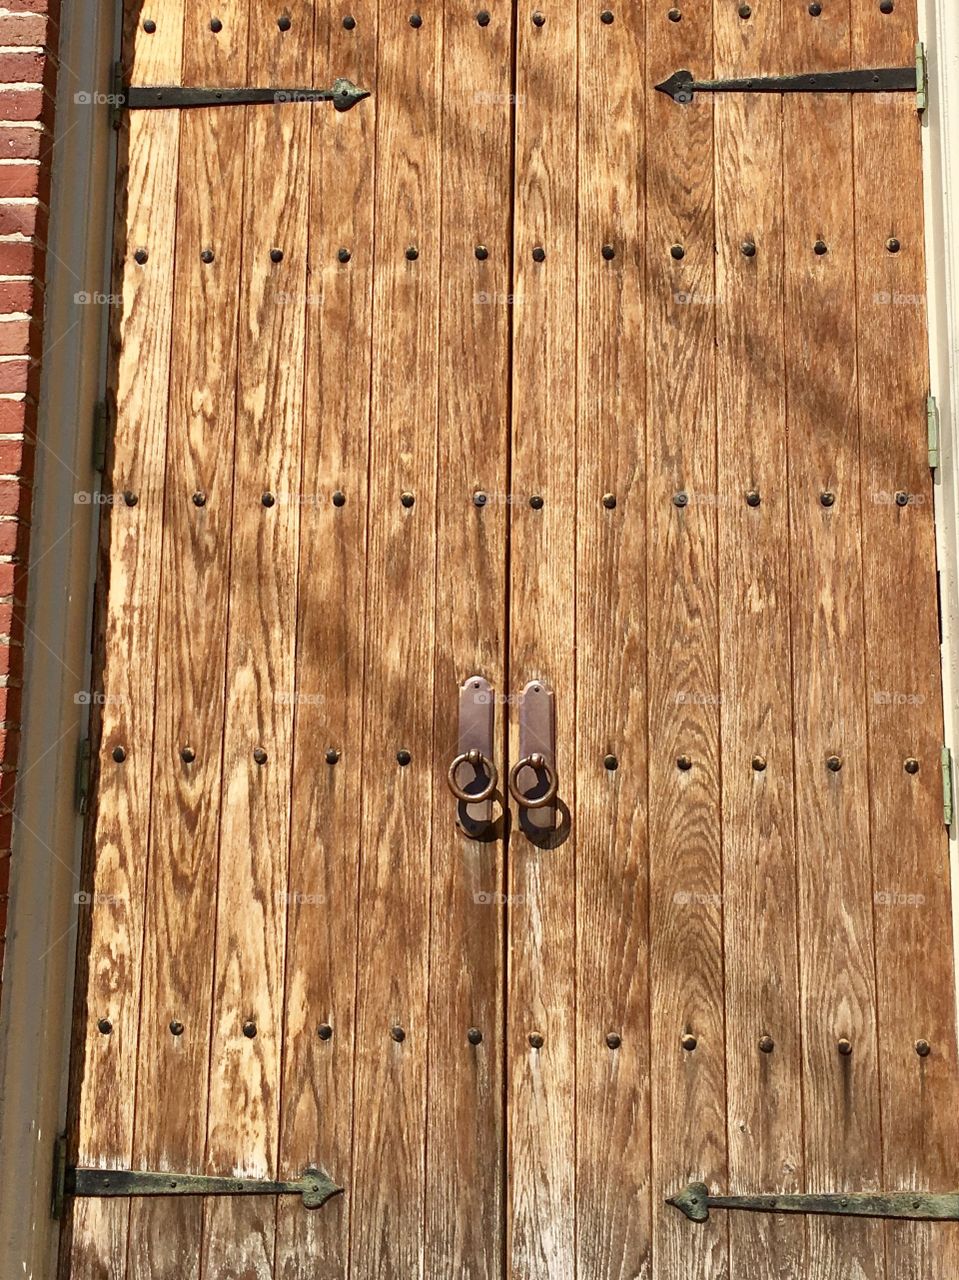 Big wooden door entrance way